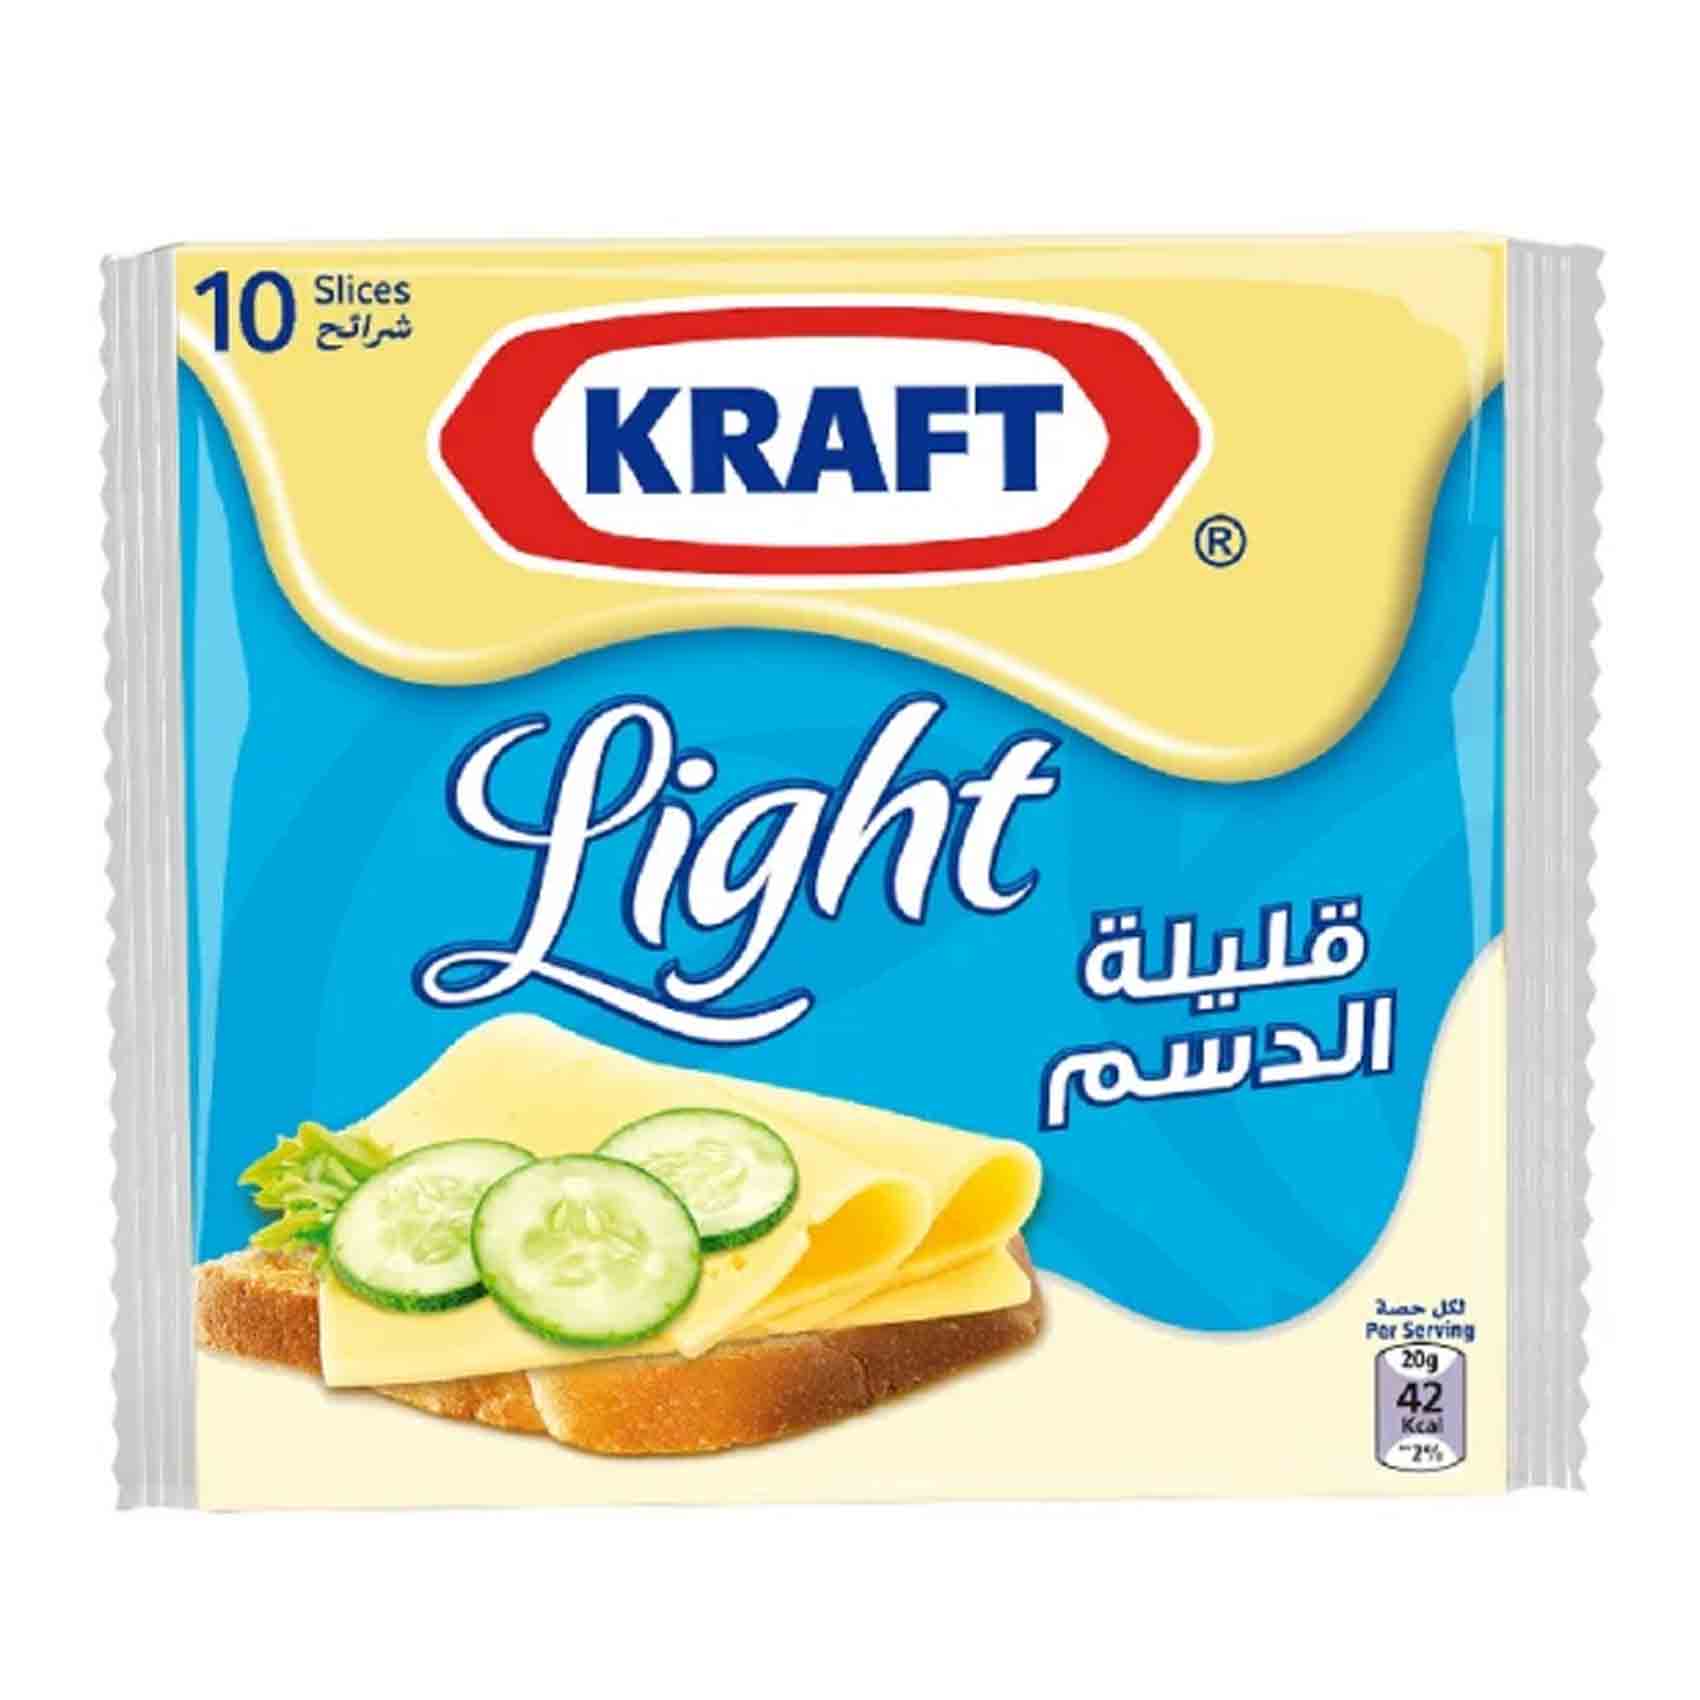 Kraft Cheese Singles Light 200 Gram